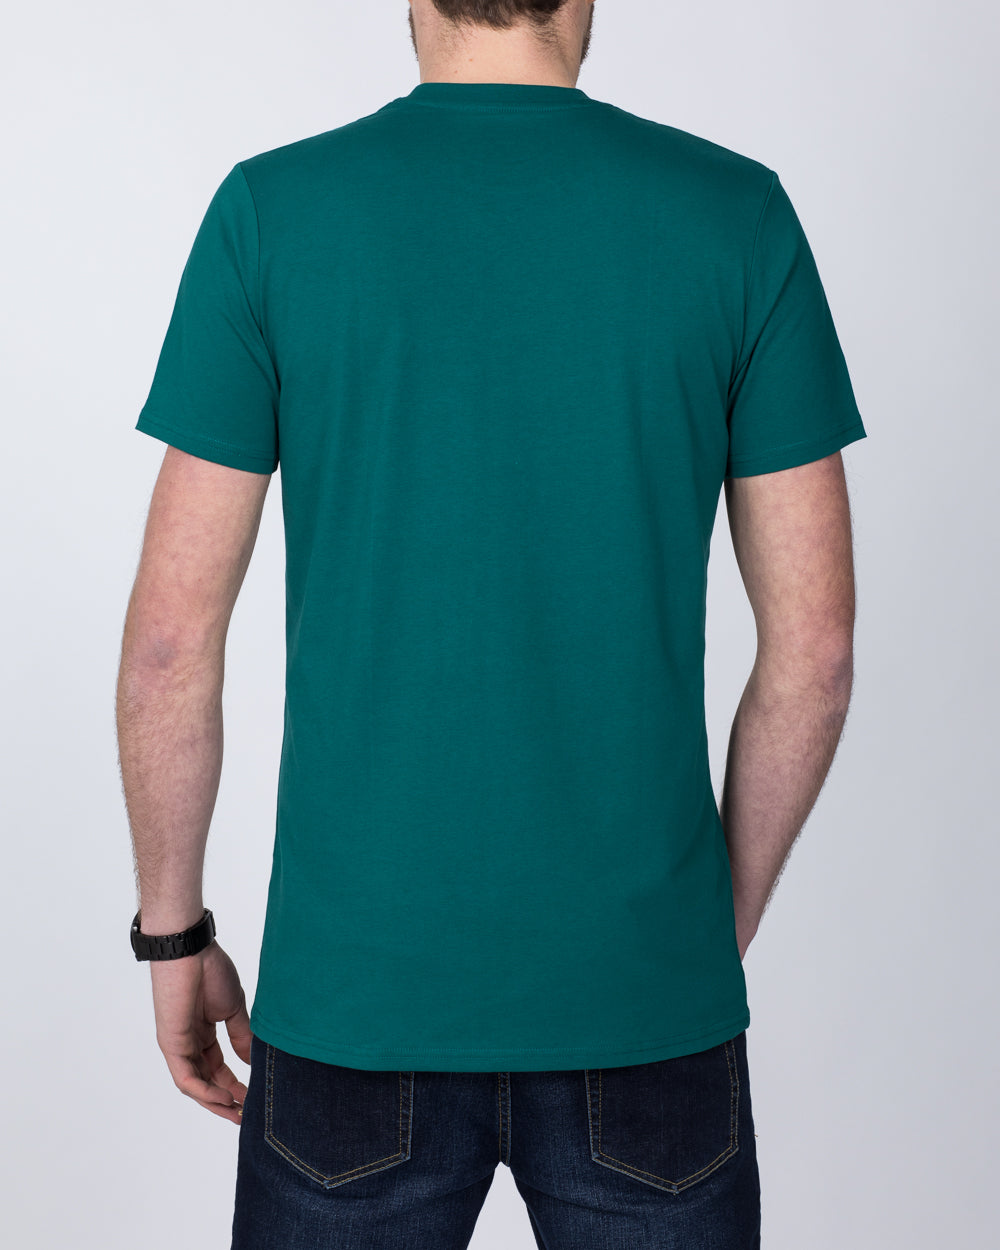 Girav Sydney Tall T-Shirt (storm green)